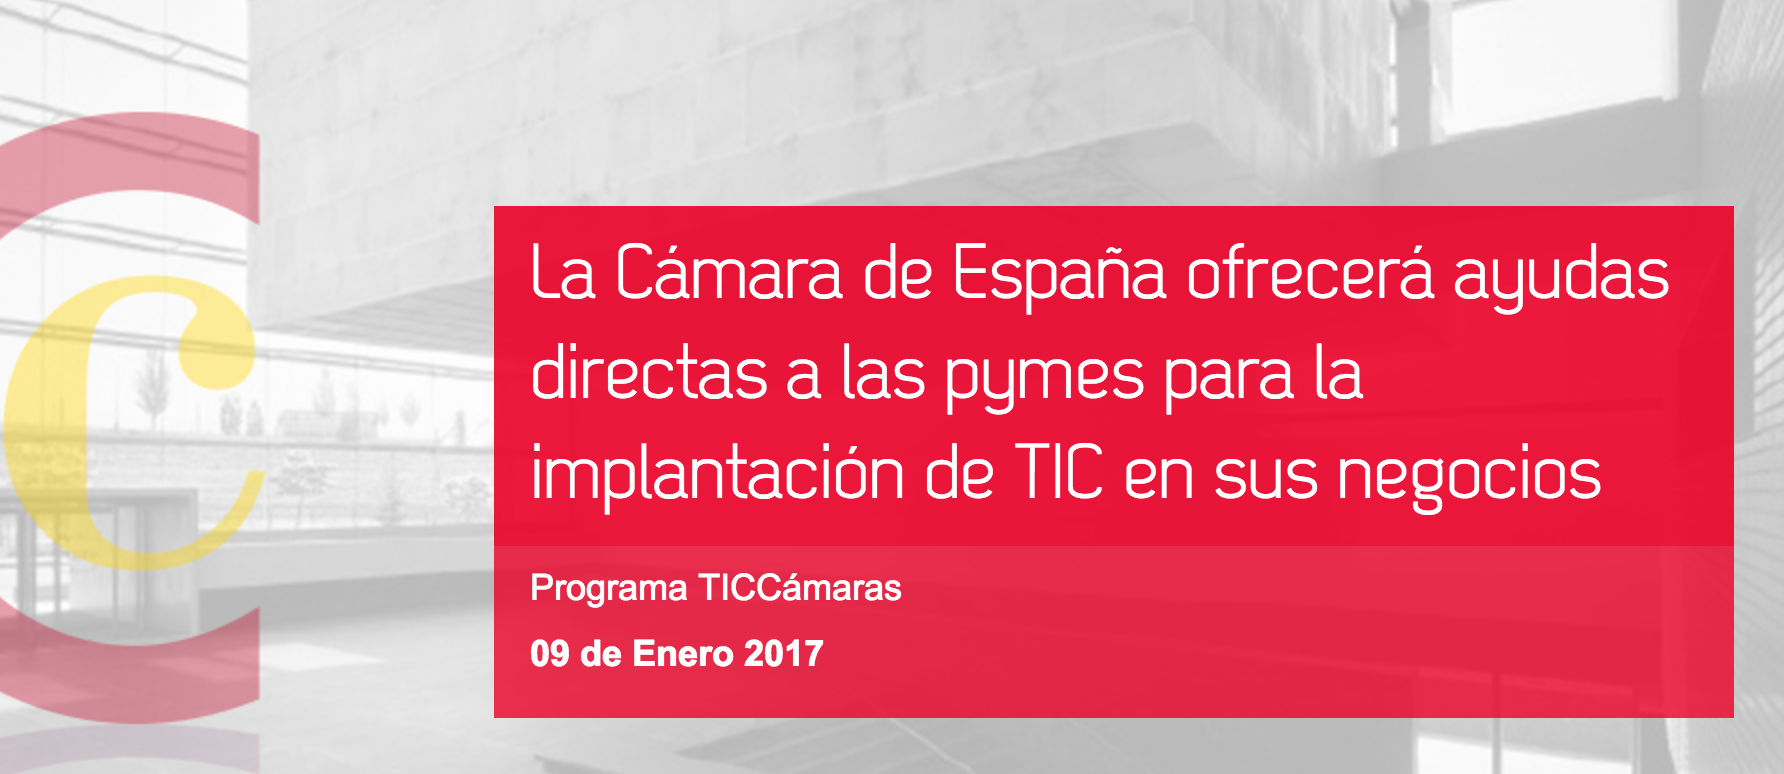 Ayudas-TICCamaras-InnoCamaras-Sevilla